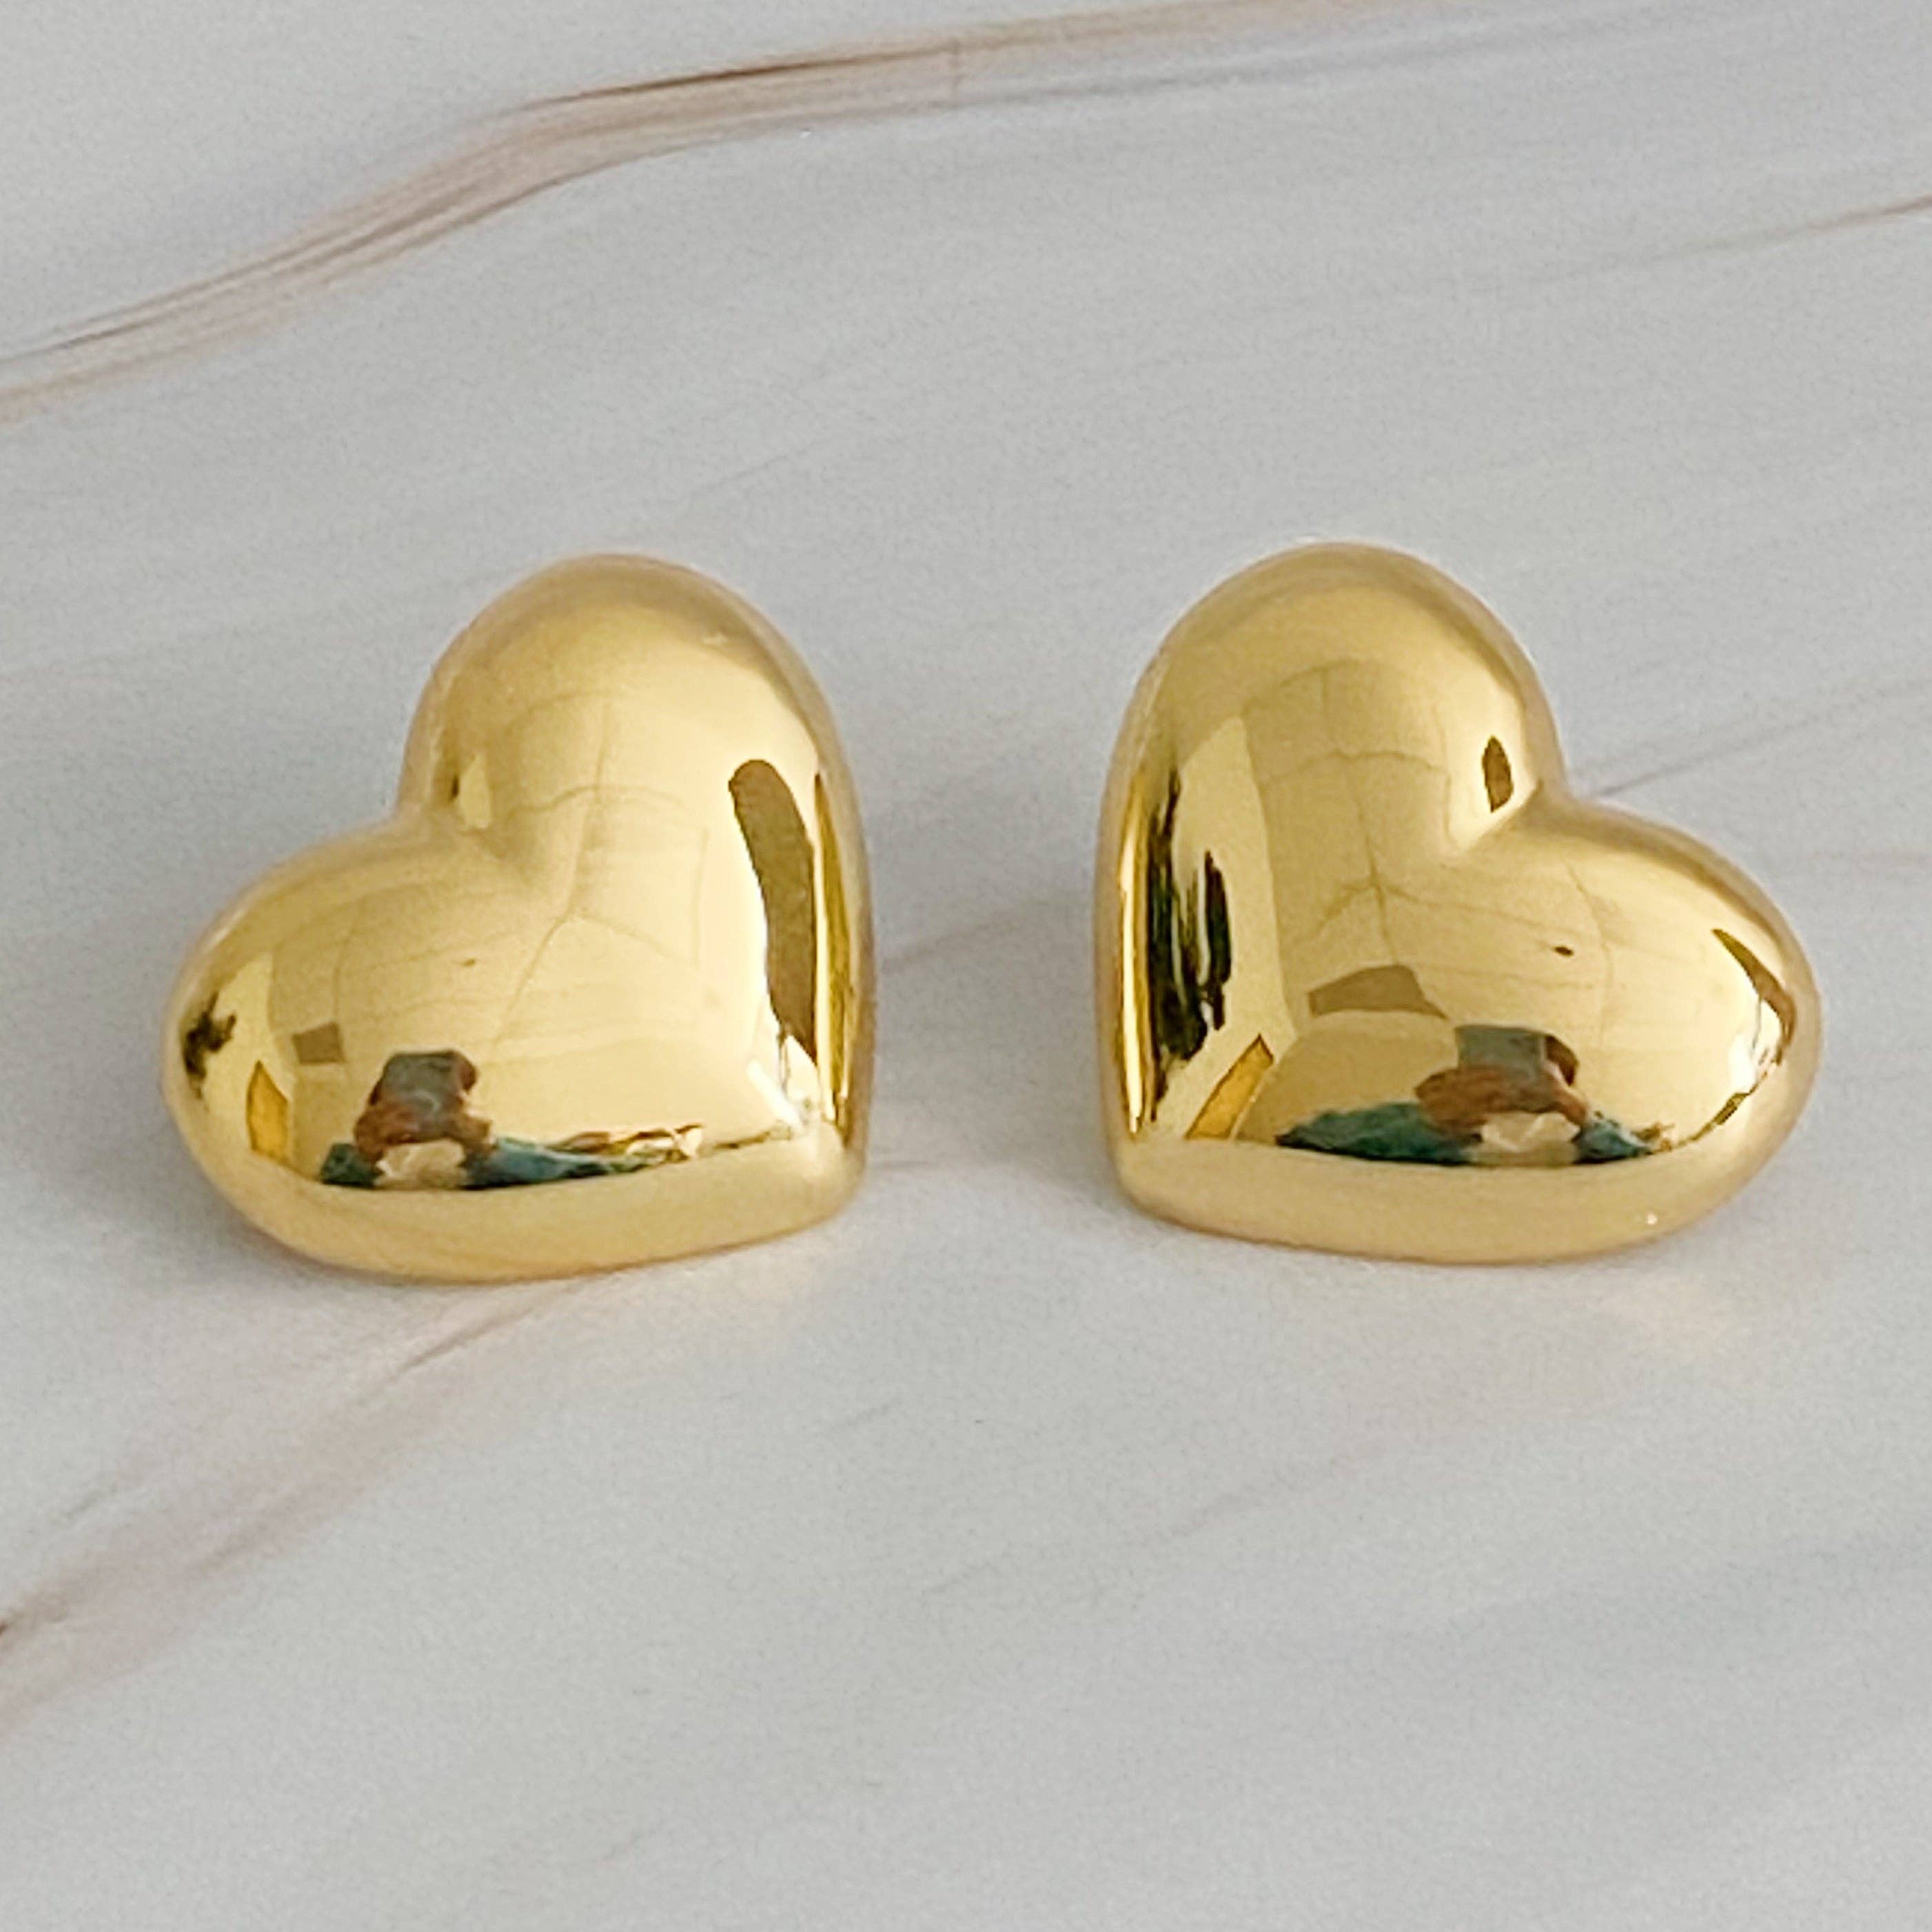 Polish My Heart Stud Earrings: Gold